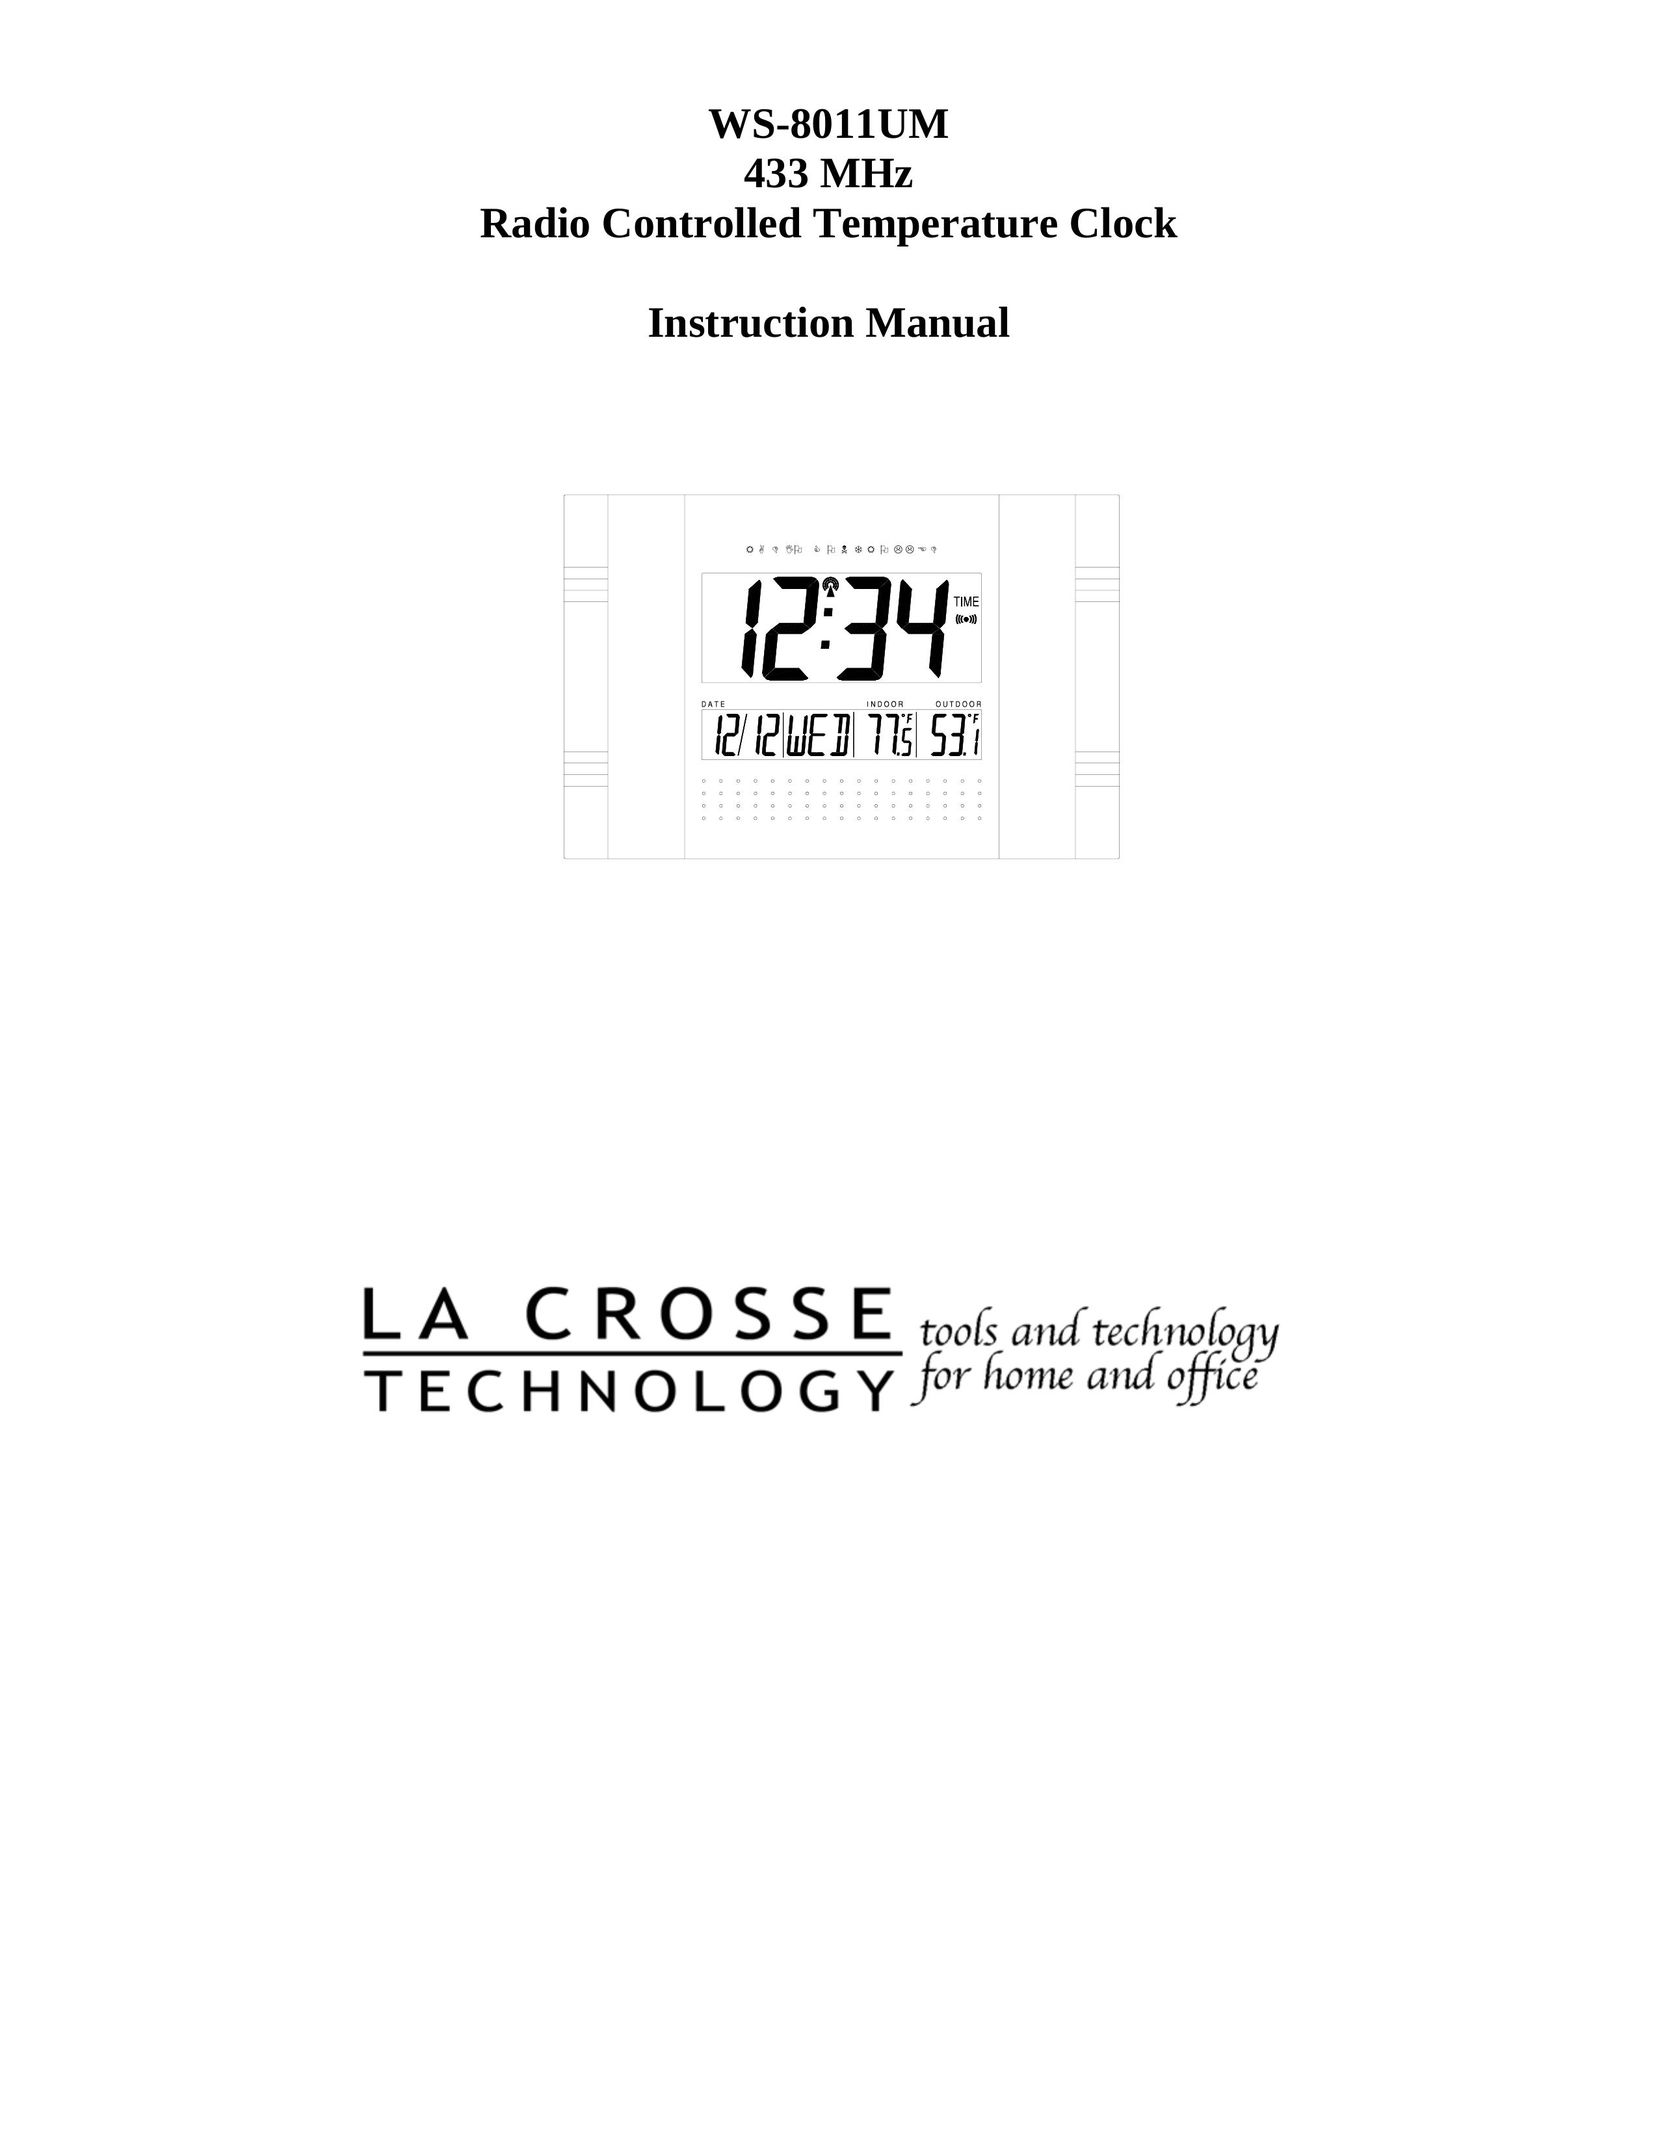 La Crosse Technology WS-8011UM Clock User Manual